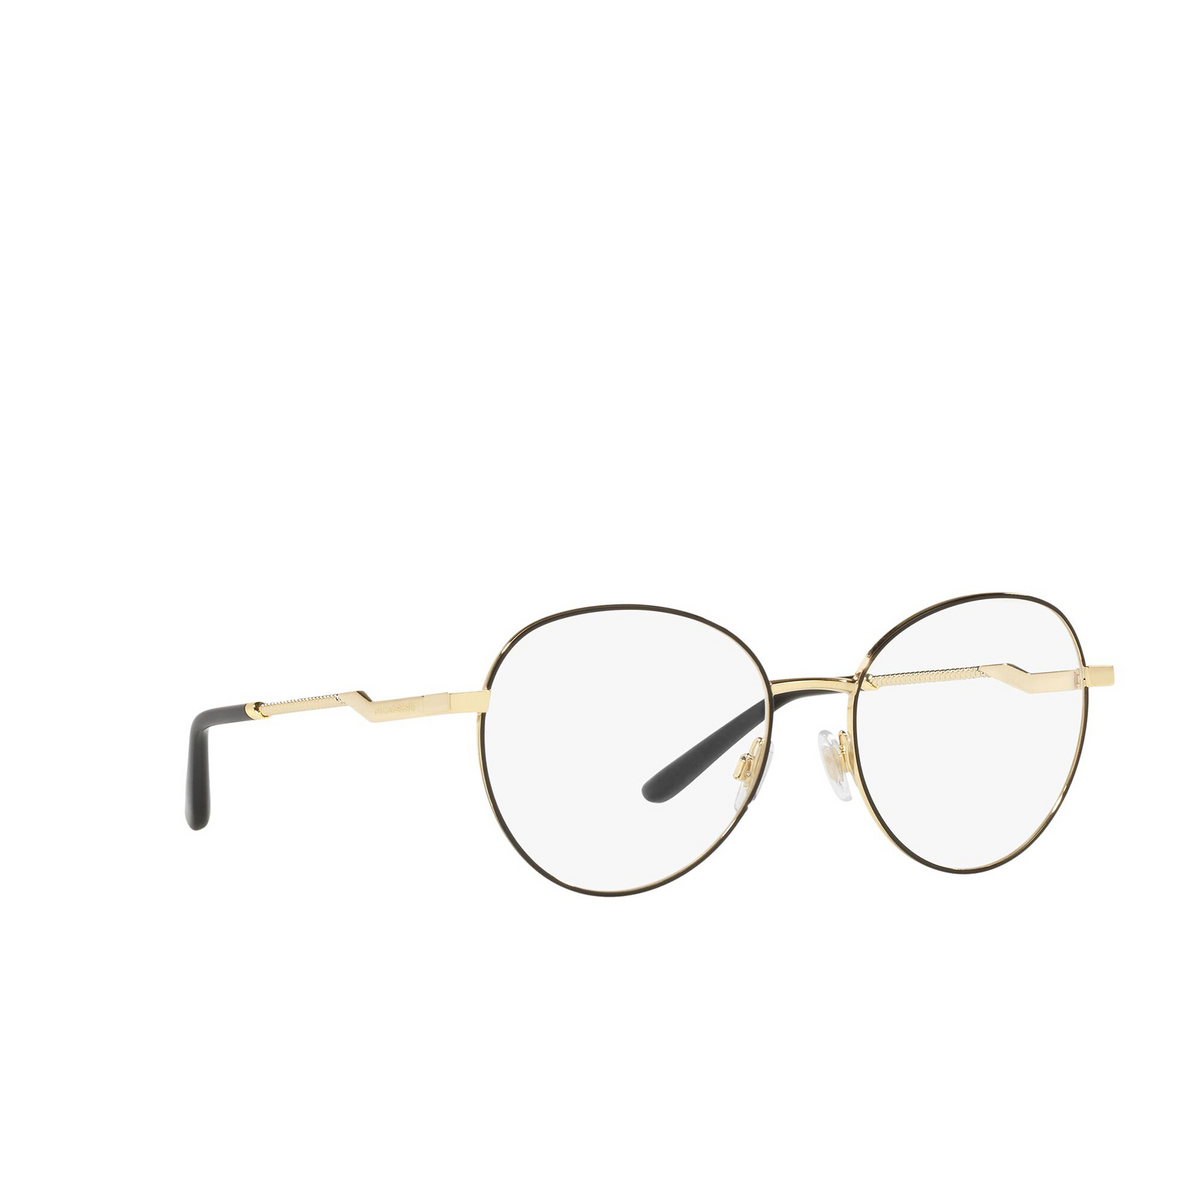 Dolce & Gabbana® Round Eyeglasses: DG1333 color Gold / Black 1334 - three-quarters view.